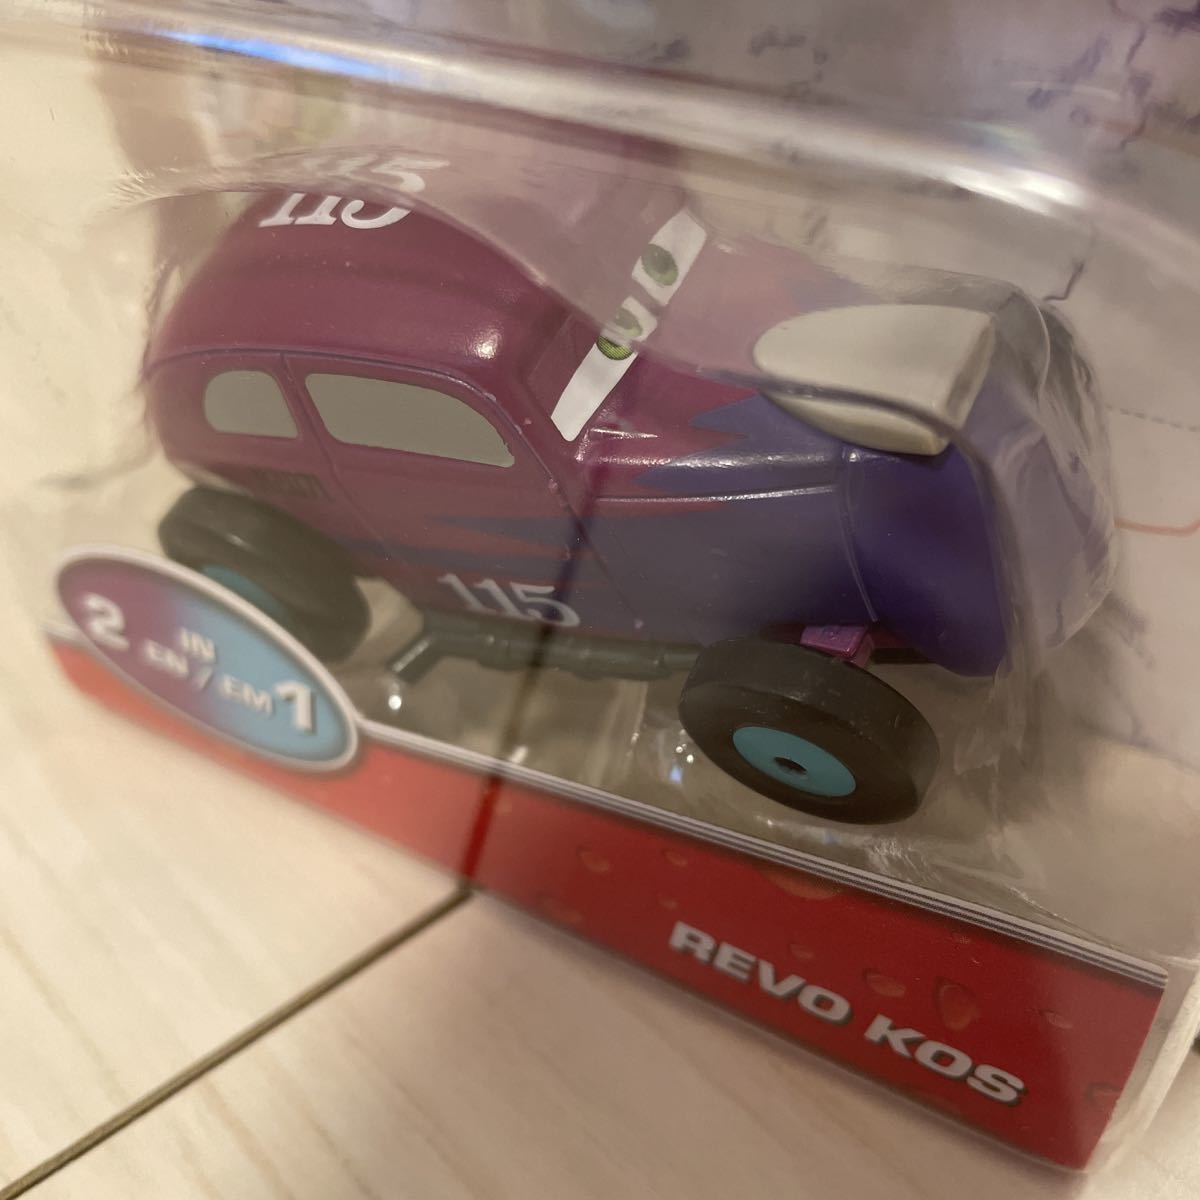  Mattel The Cars CARS MATTEL color change .-REVO KOS Revo kos minicar Disney Disney character car on The load 115